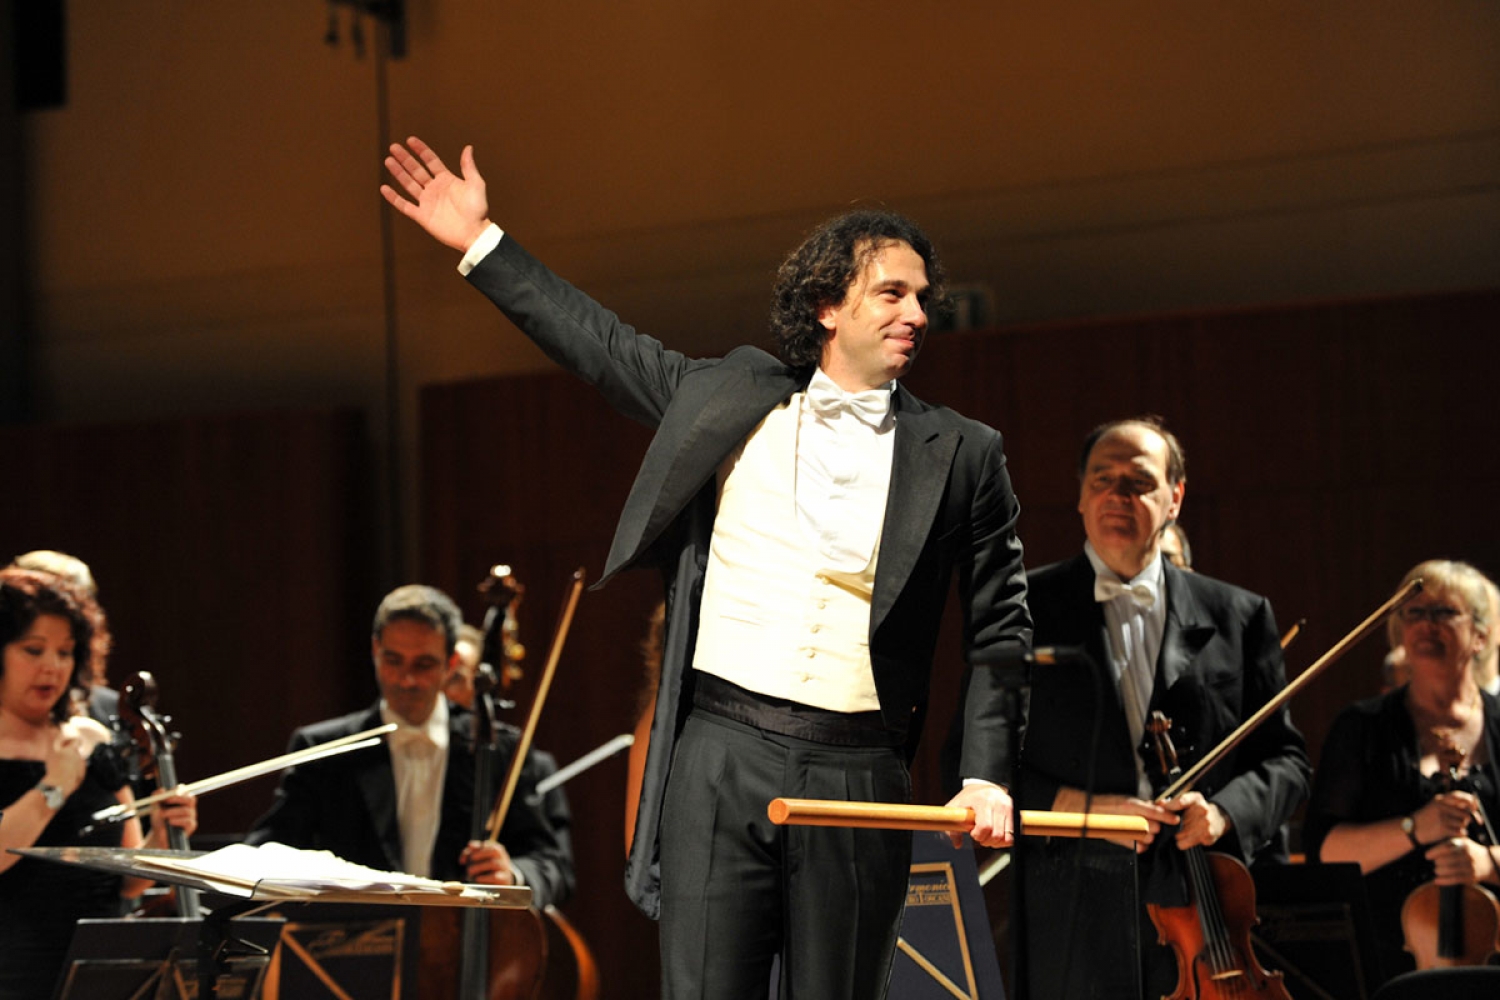 Francesco Lanzillotta Conductor